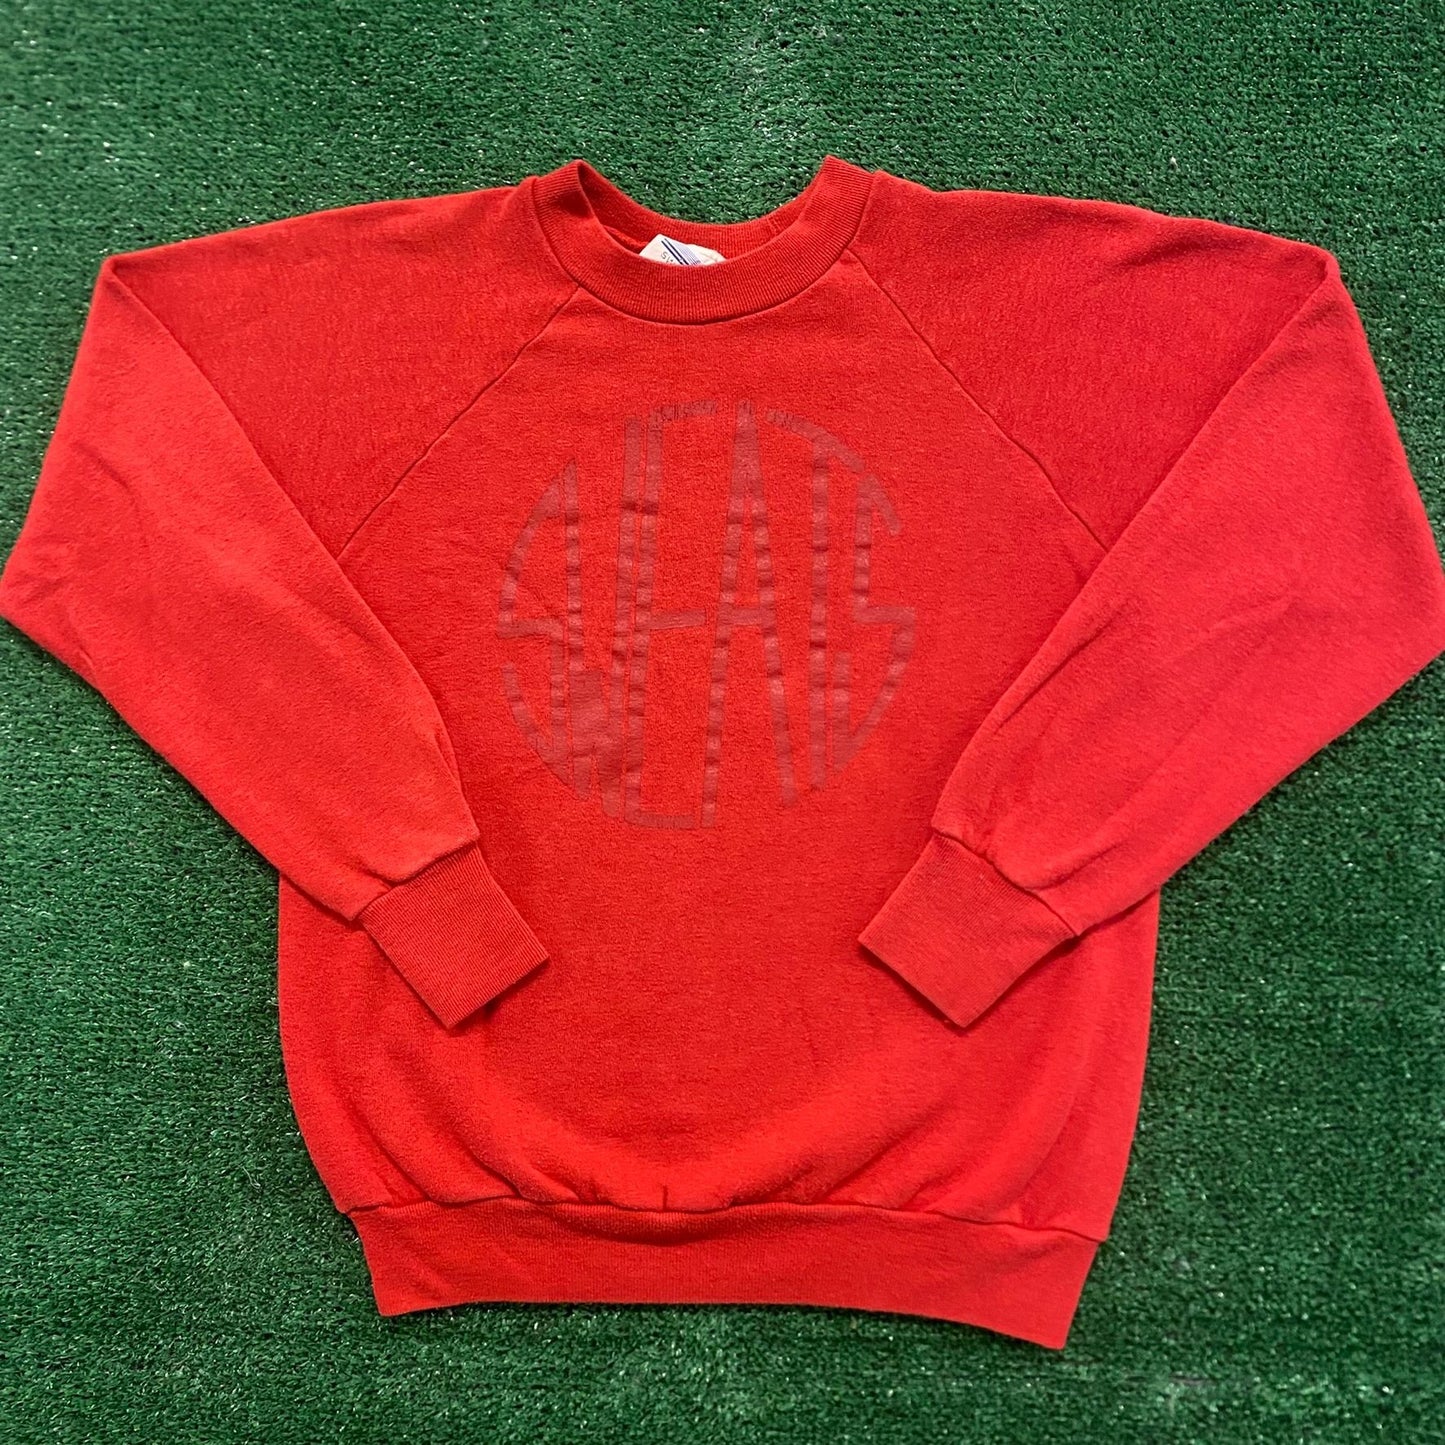 Sweats Vintage 80s Essential Crewneck Sweatshirt